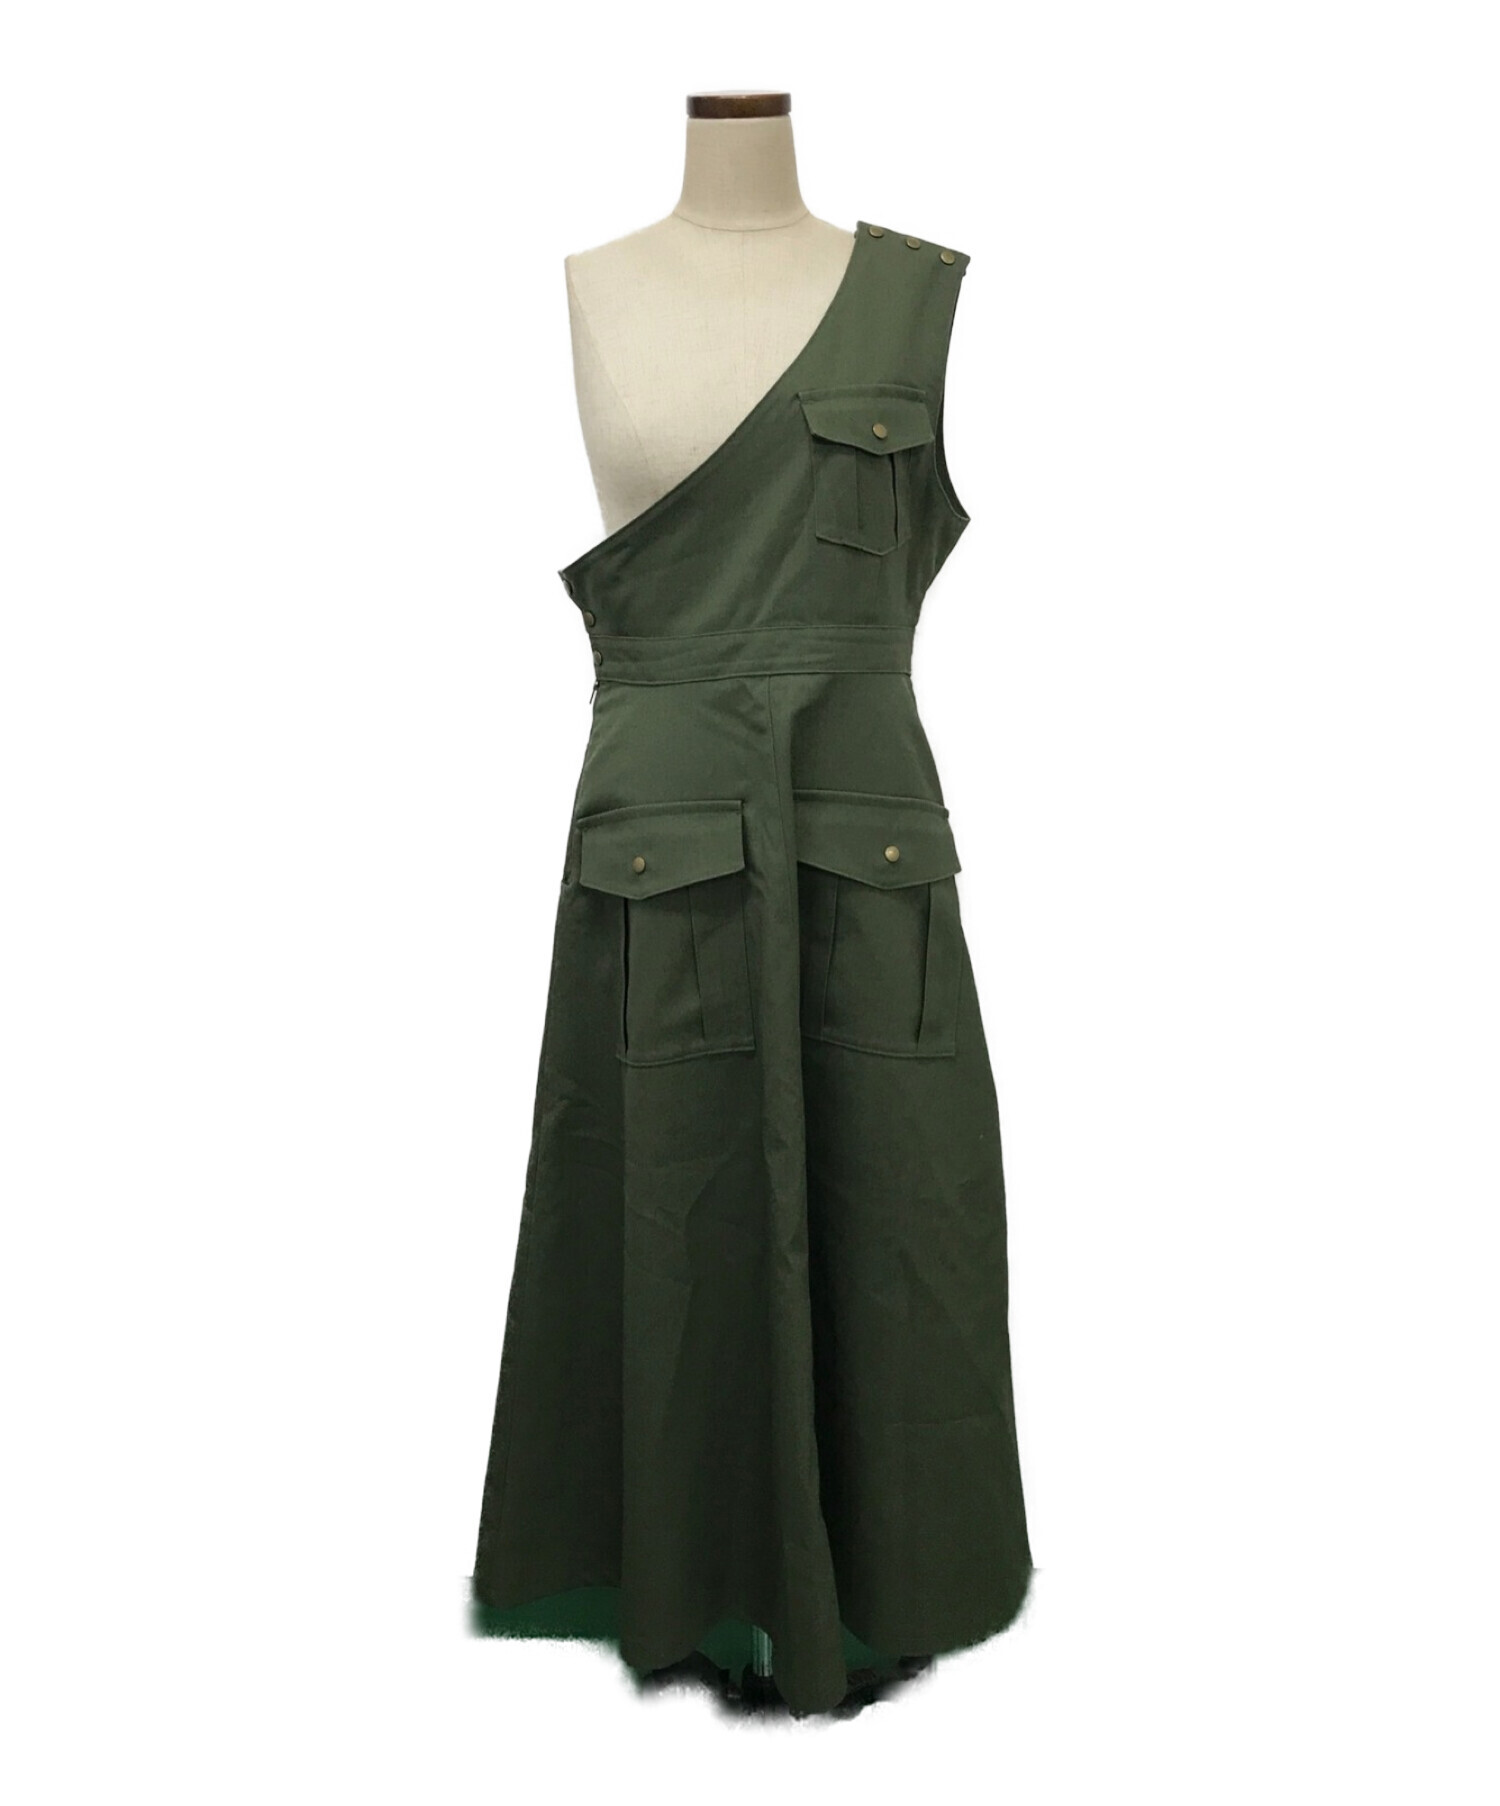 Re:poris (レポリス) military sash dress オリーブ サイズ:-